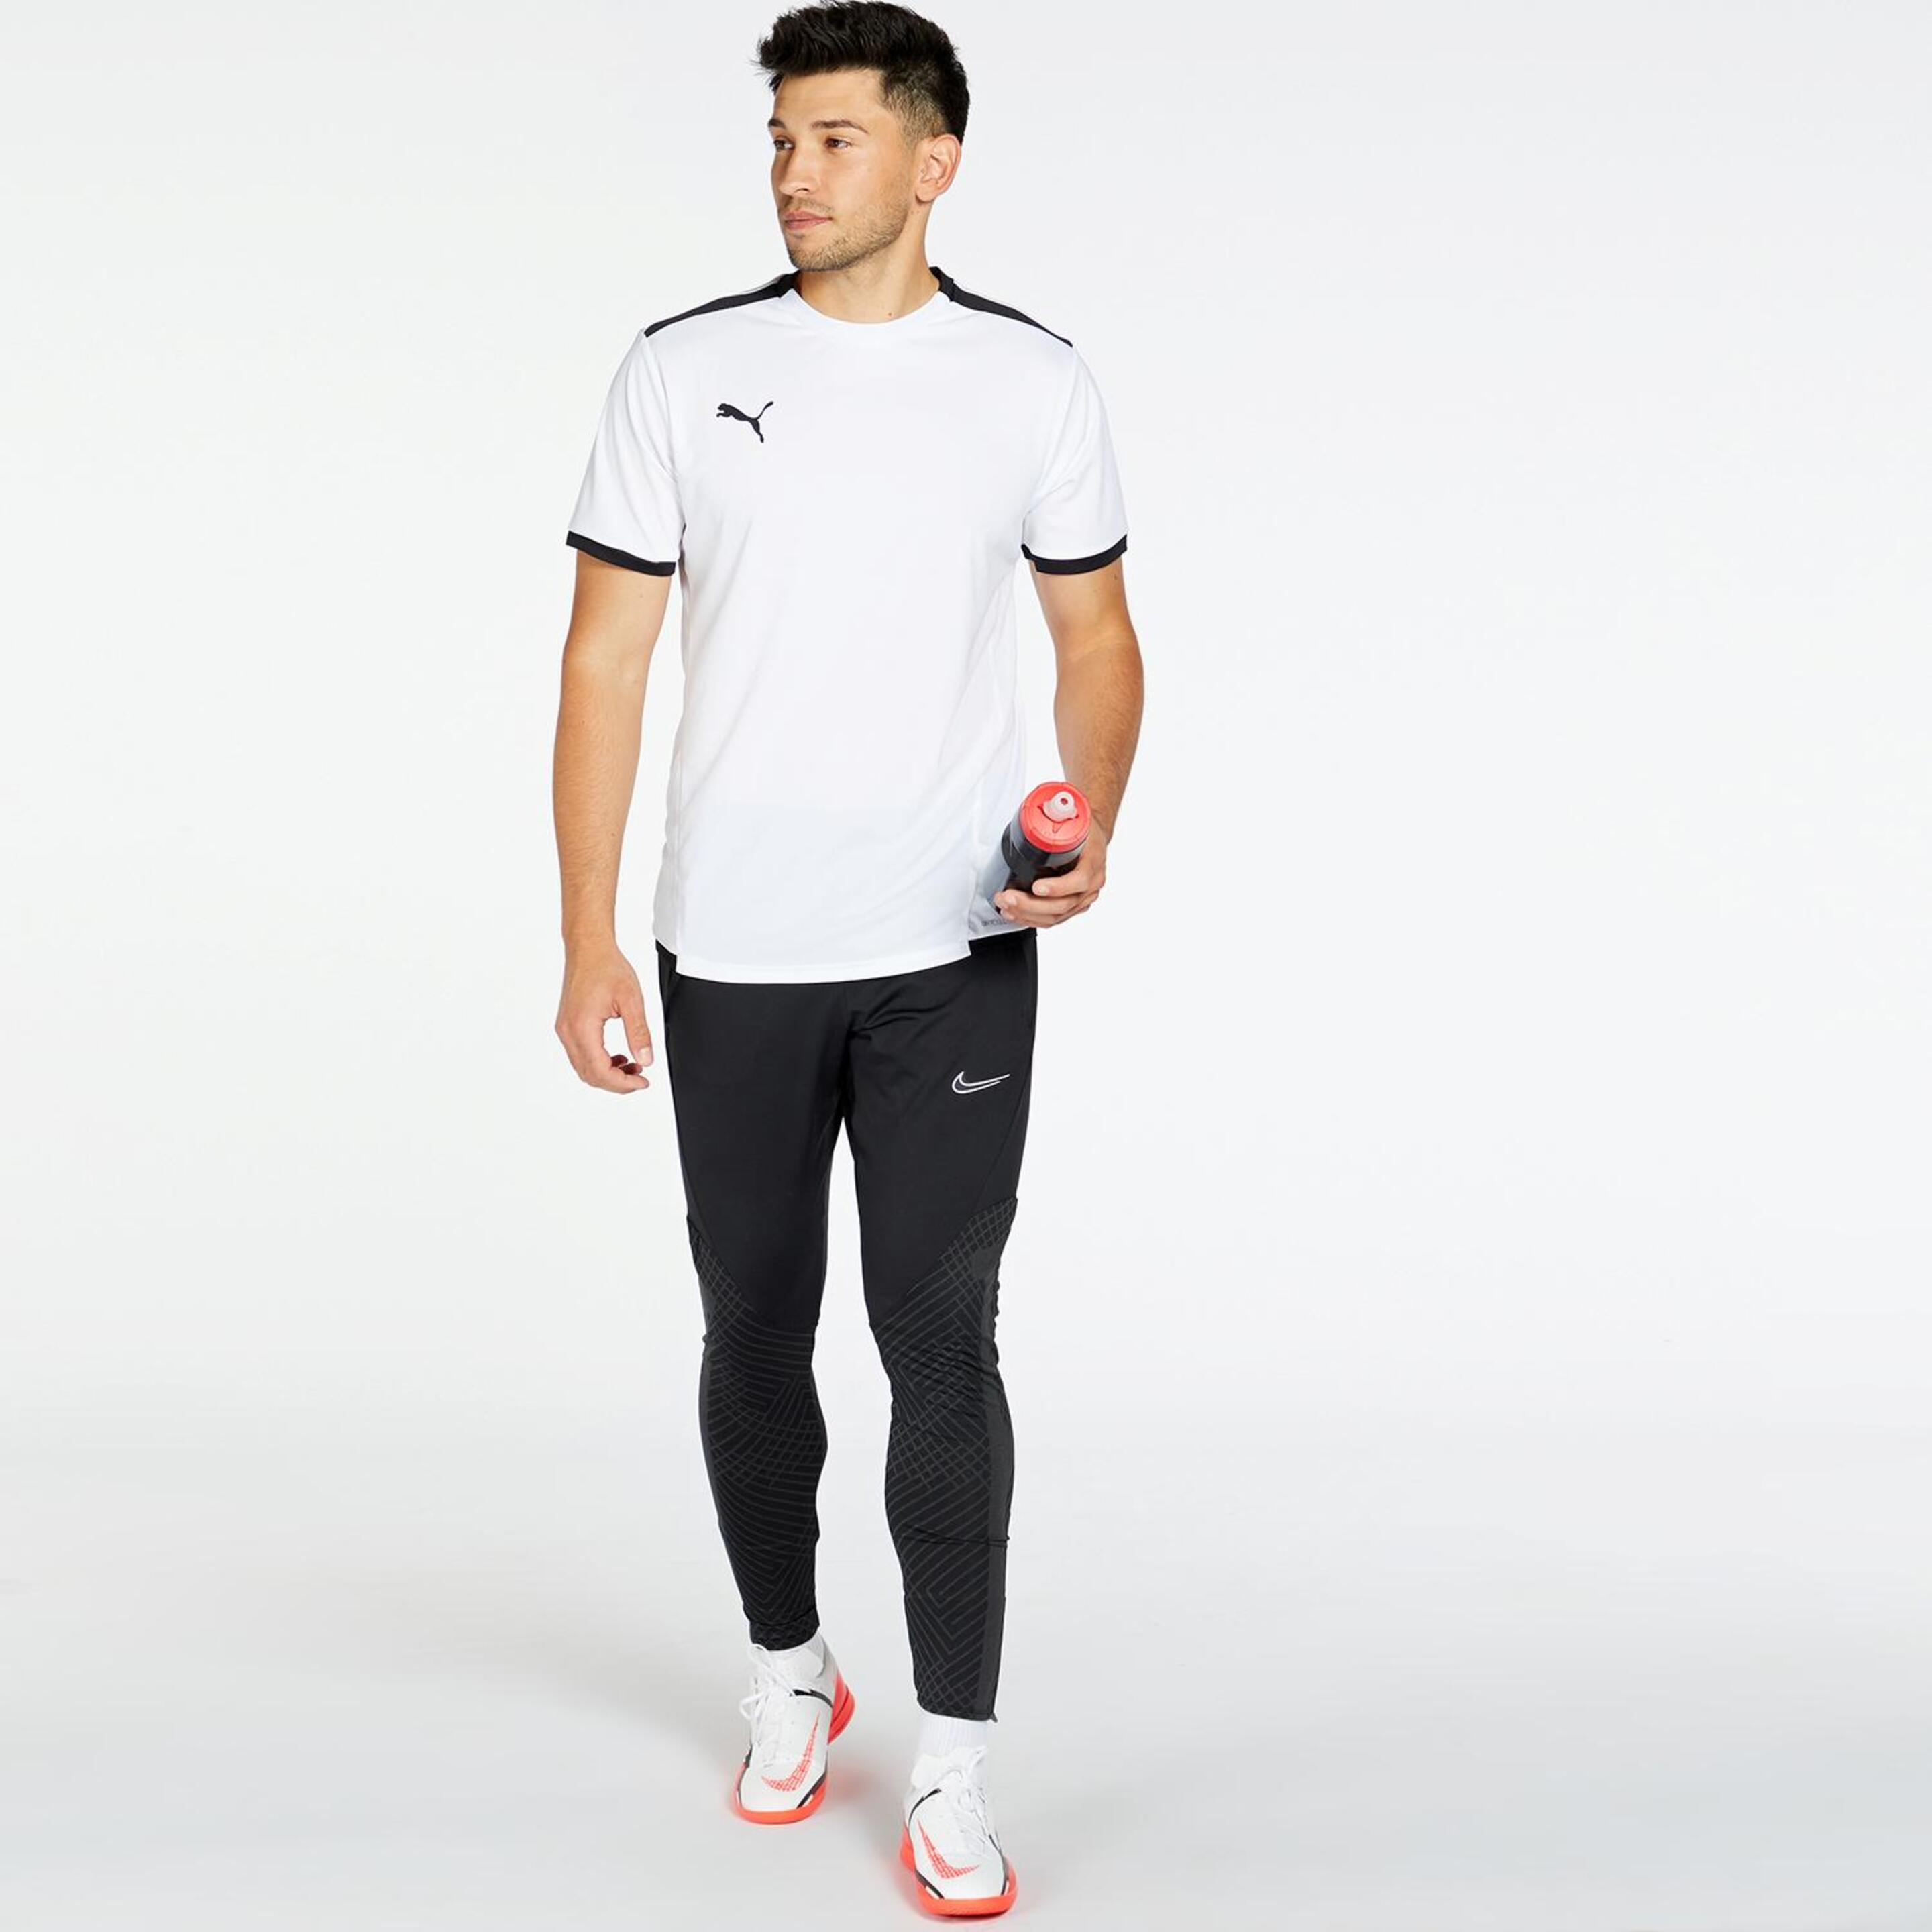 Puma Teamliga - Blanco - Camiseta Hombre